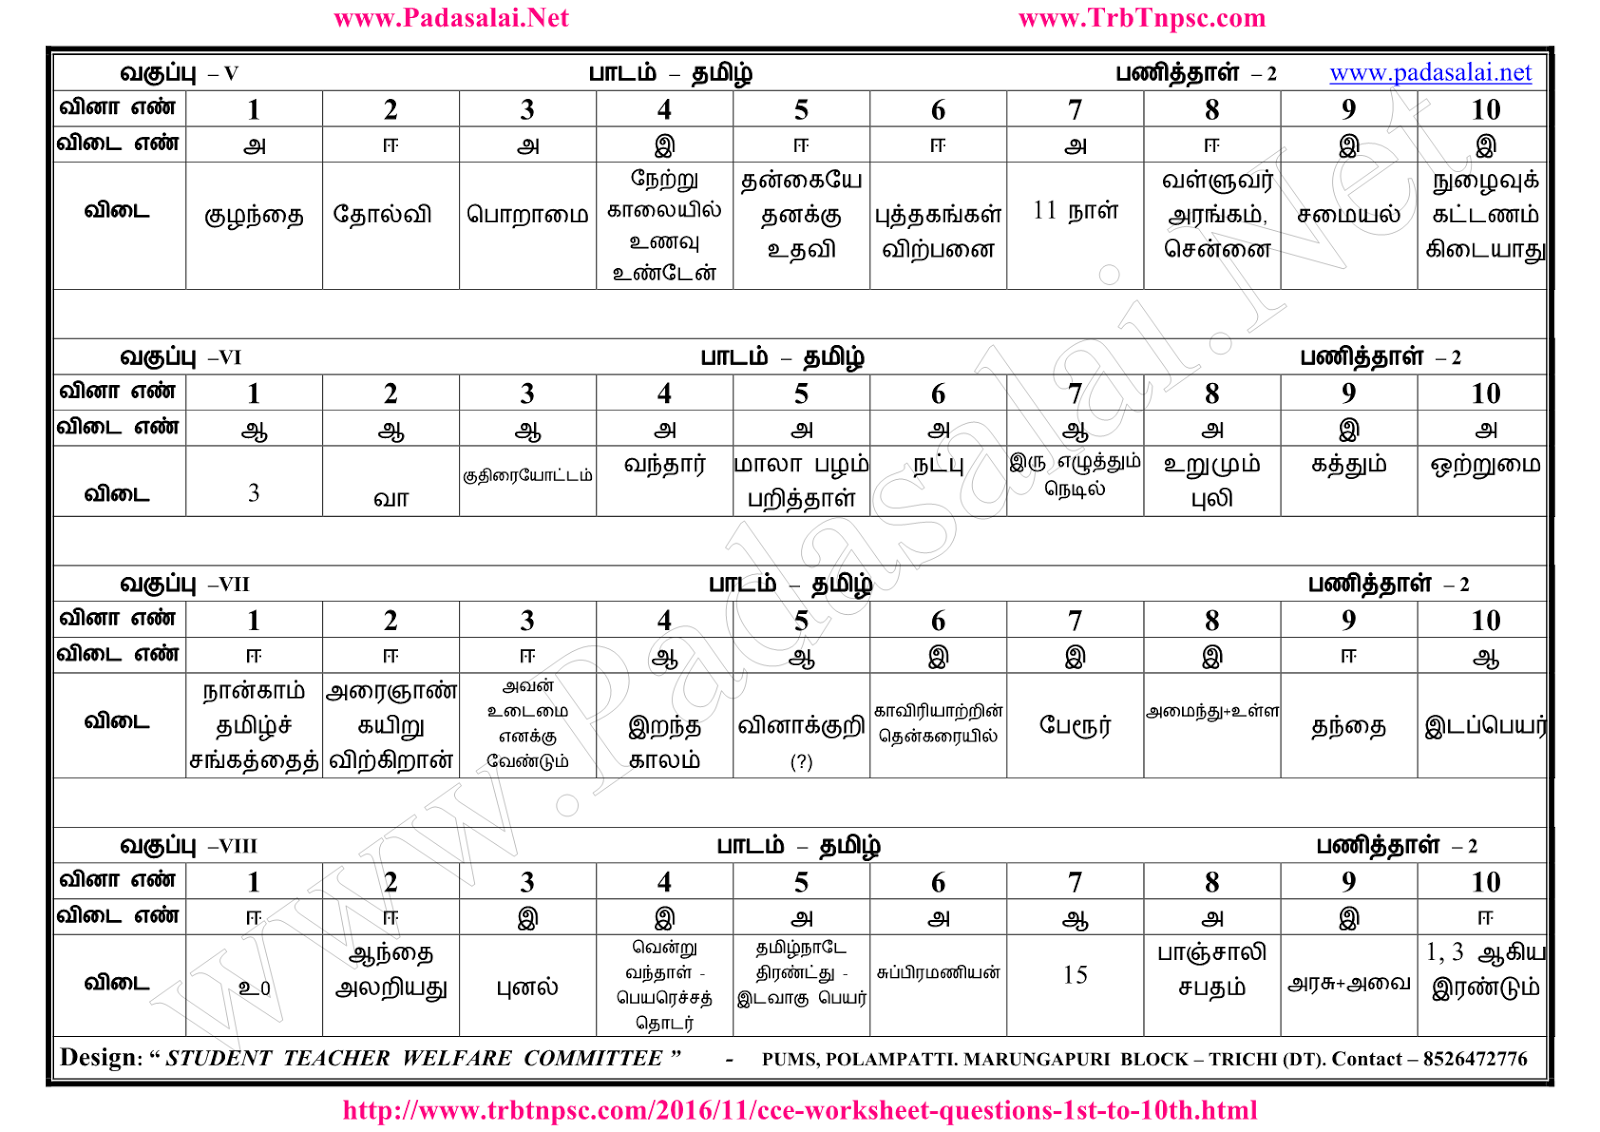 cce-worksheet-2-tamil-question-answer-keys-padasalai-net-no-1-educational-website